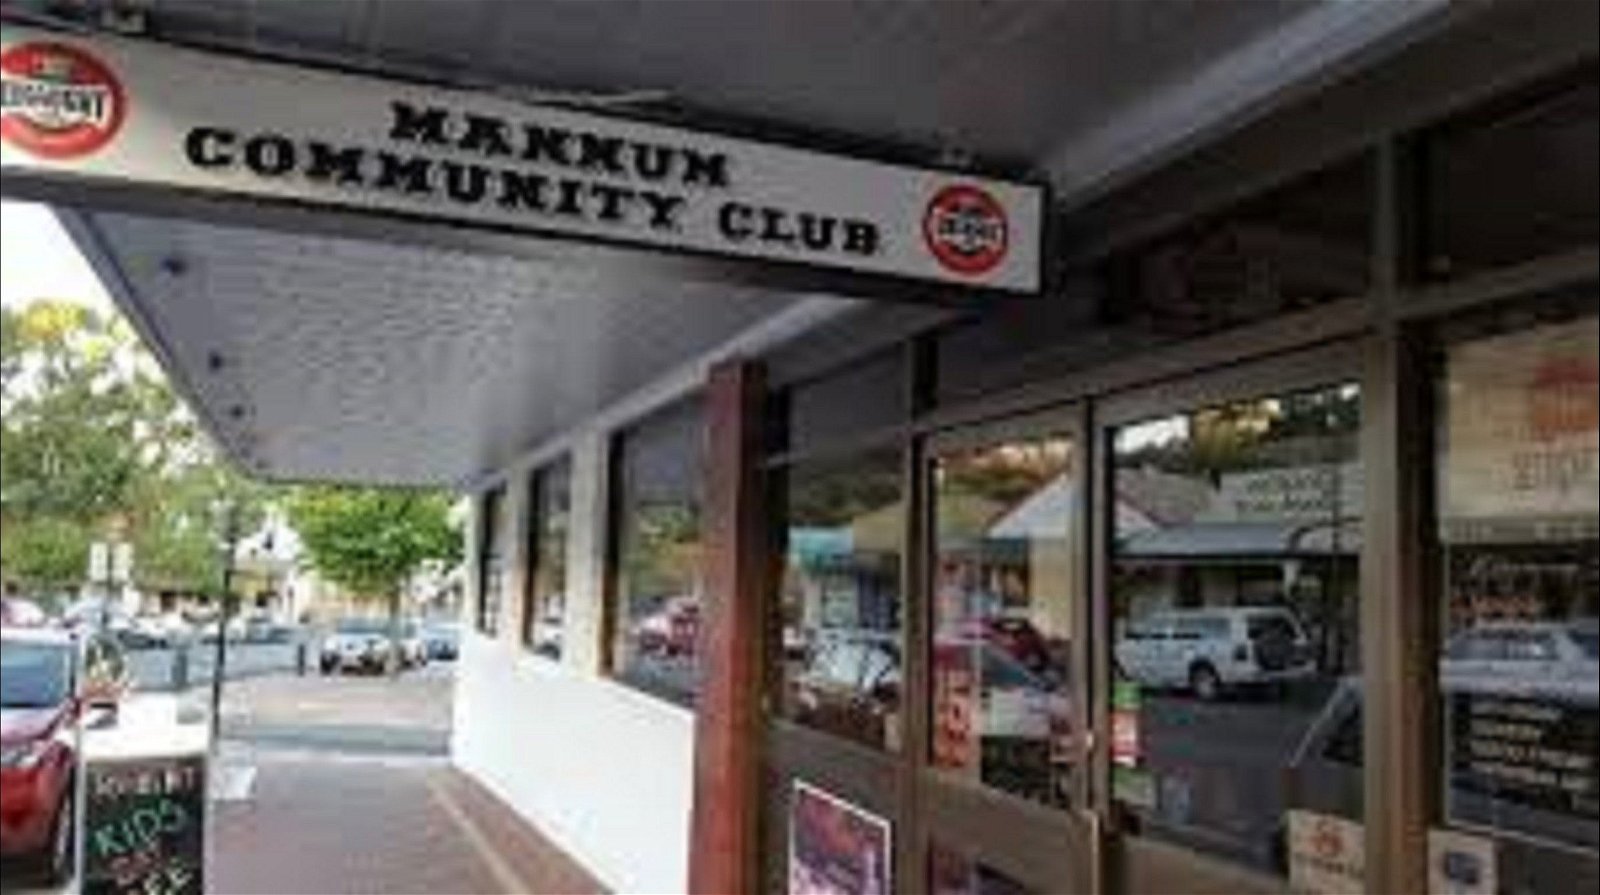 Mannum Community Club - Australia Accommodation